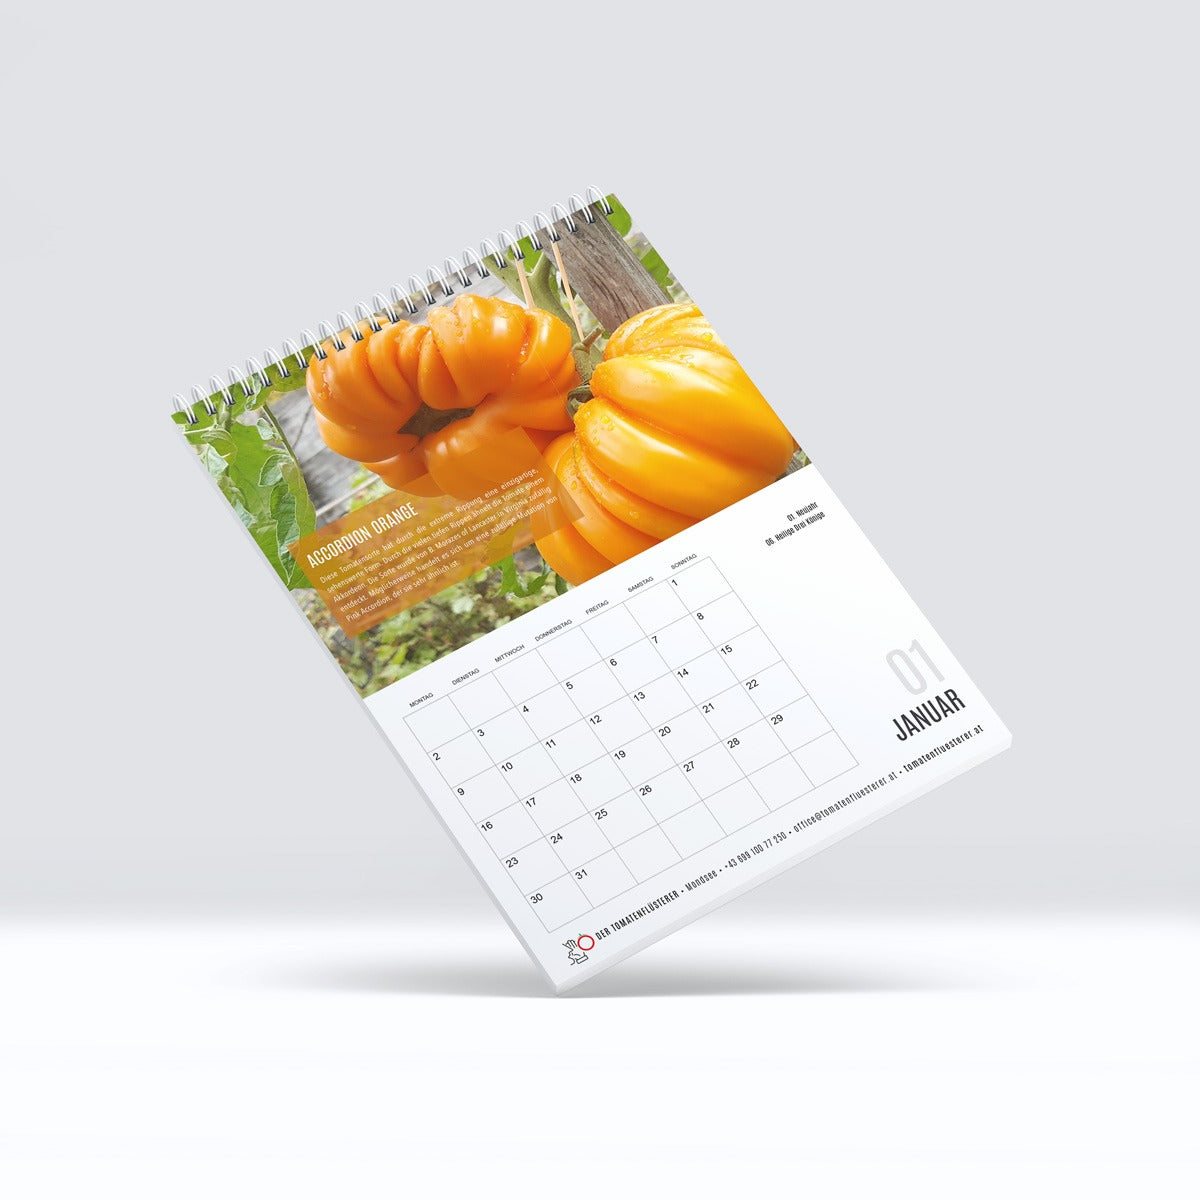 Jahreskalender 2023 - Crazy Tomatoes Edition 2023 DER TOMATENFLÜSTERER